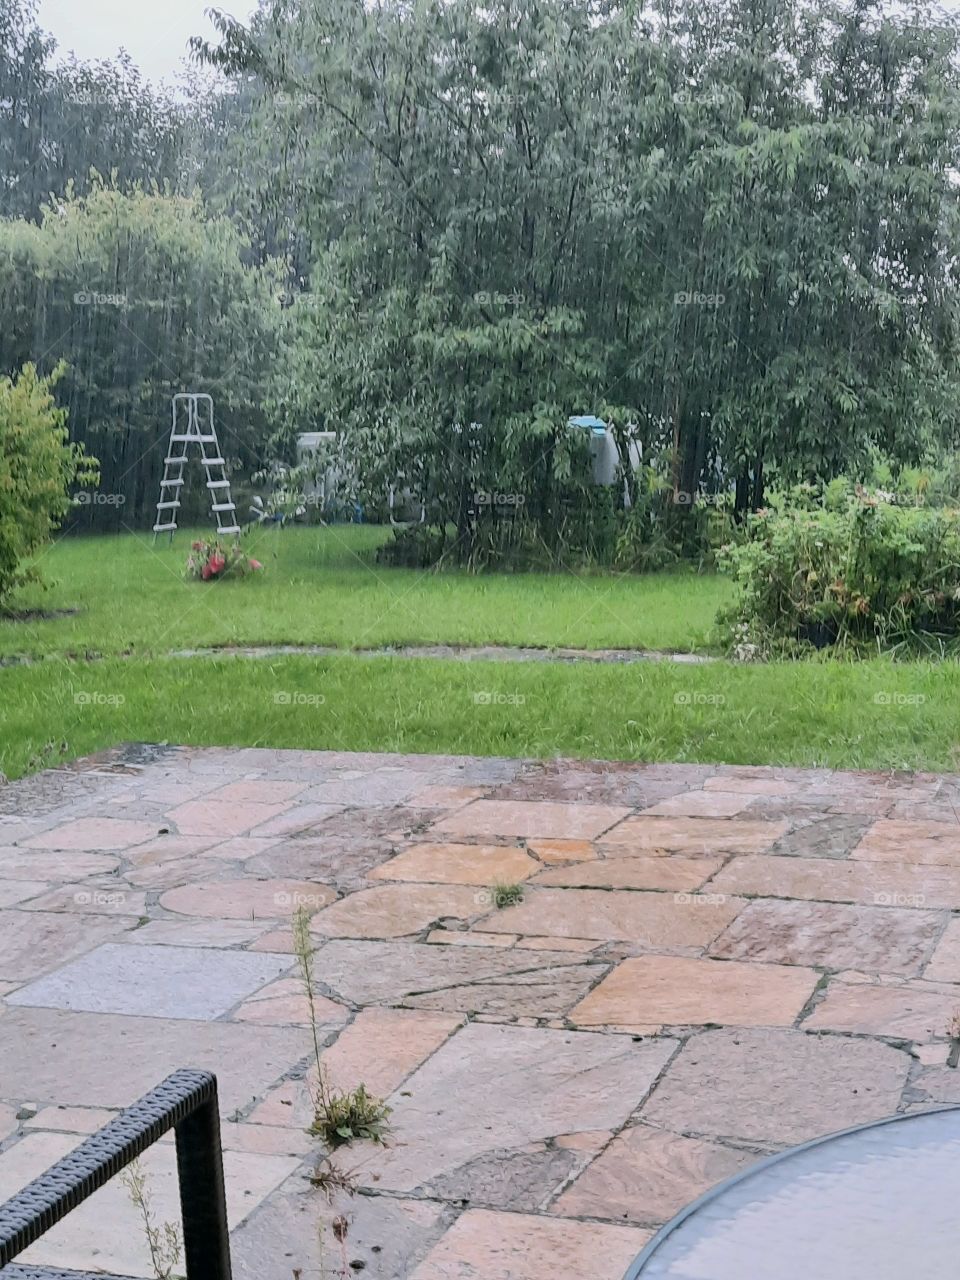 heavy rain seen through the window